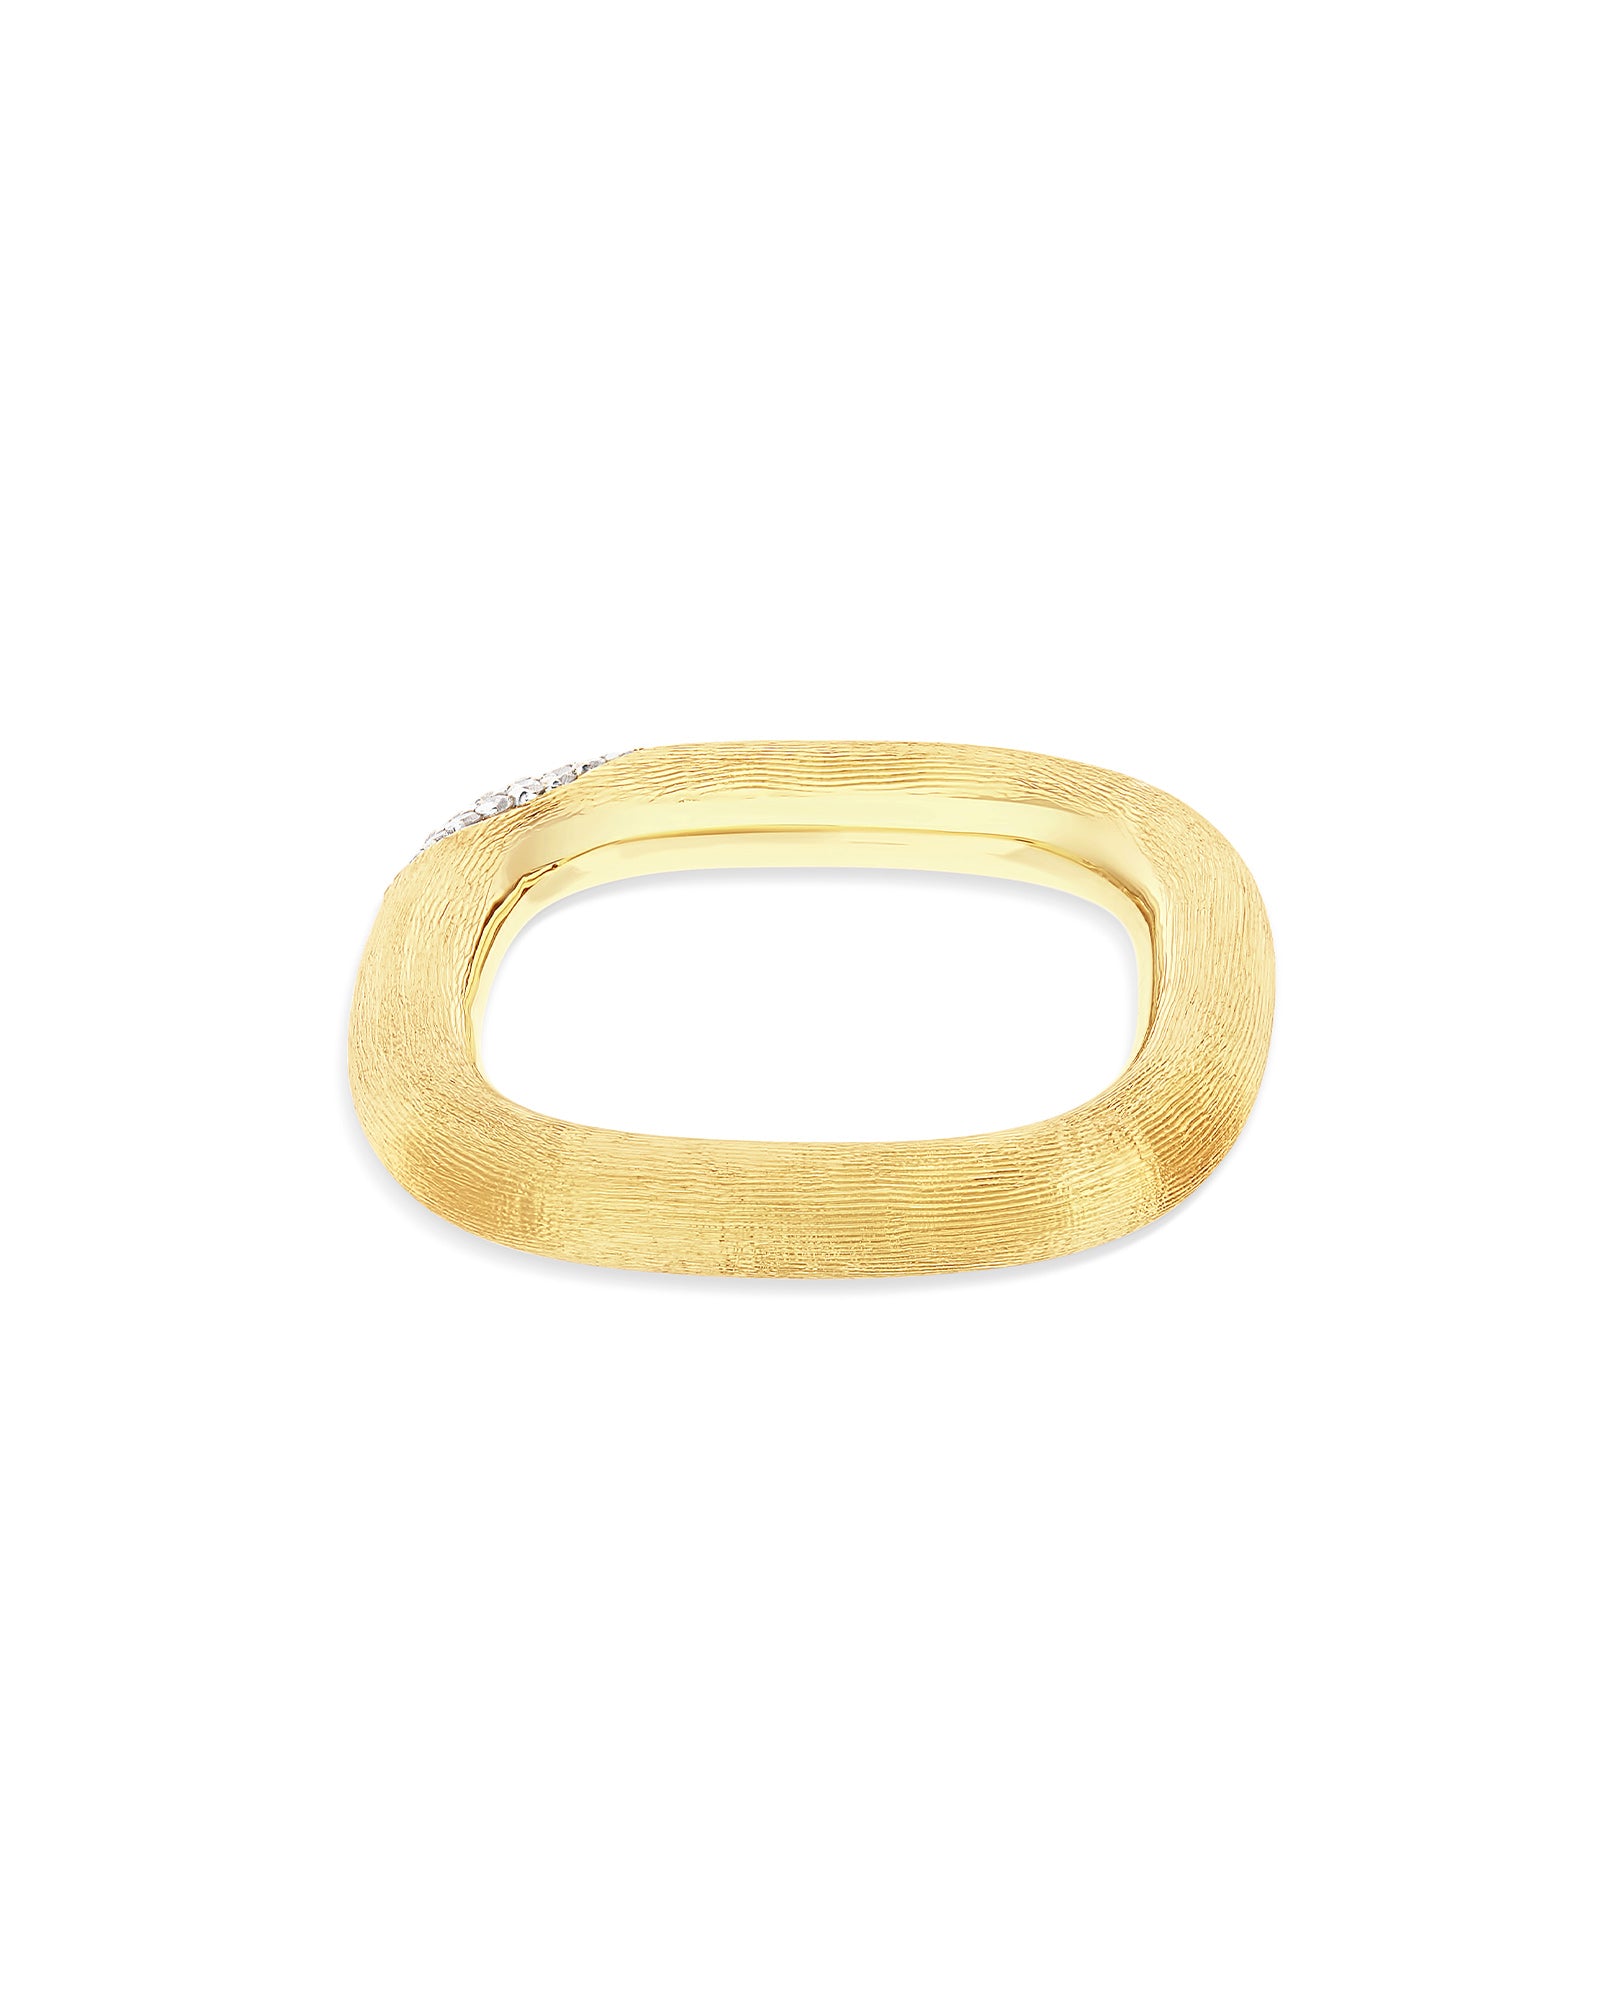 "Libera" big squared gold and diamonds ring